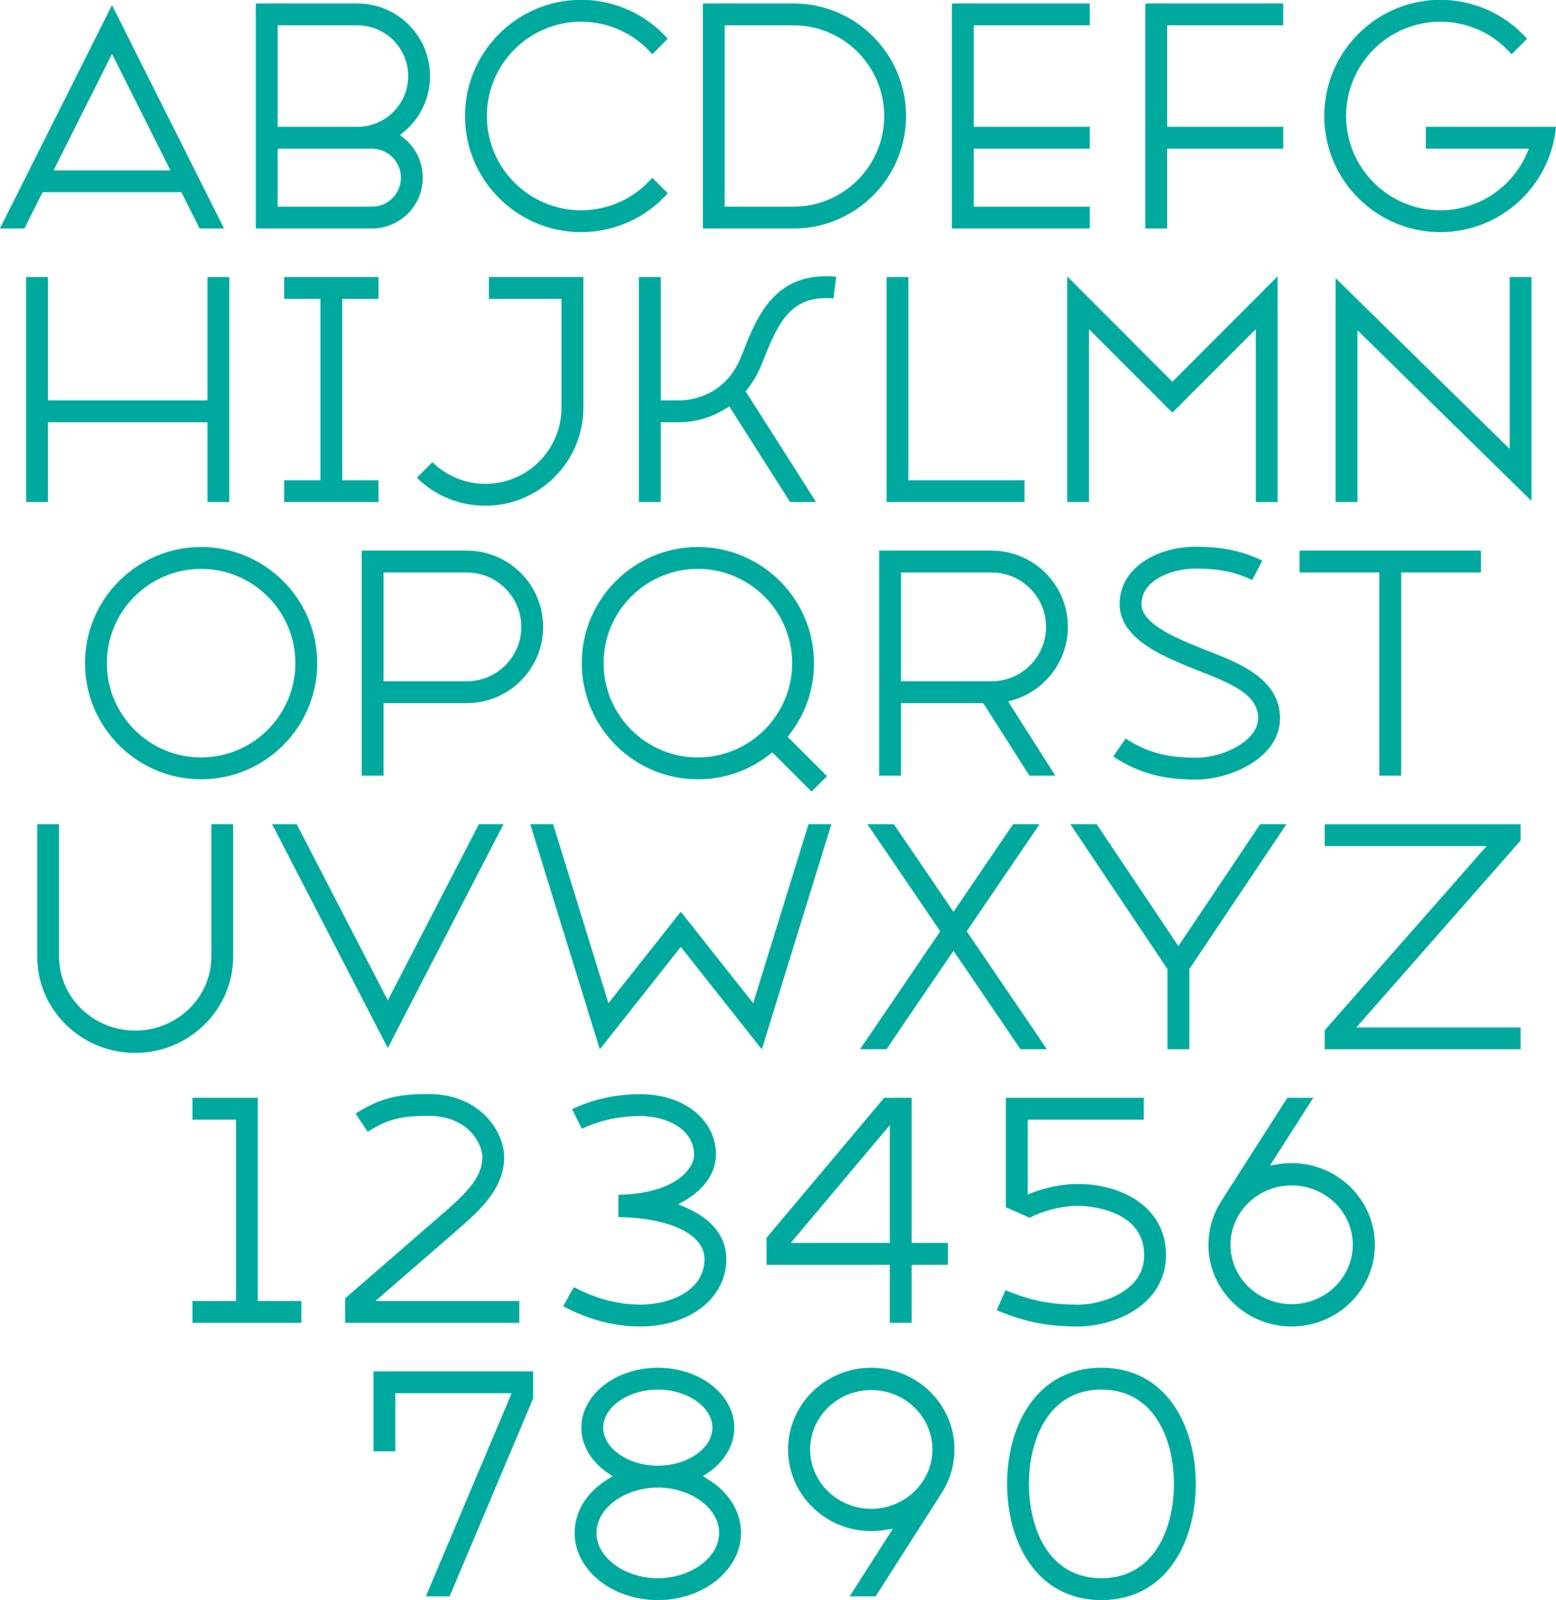 Handmade sans-serif font. Regular type. Vector illustration.